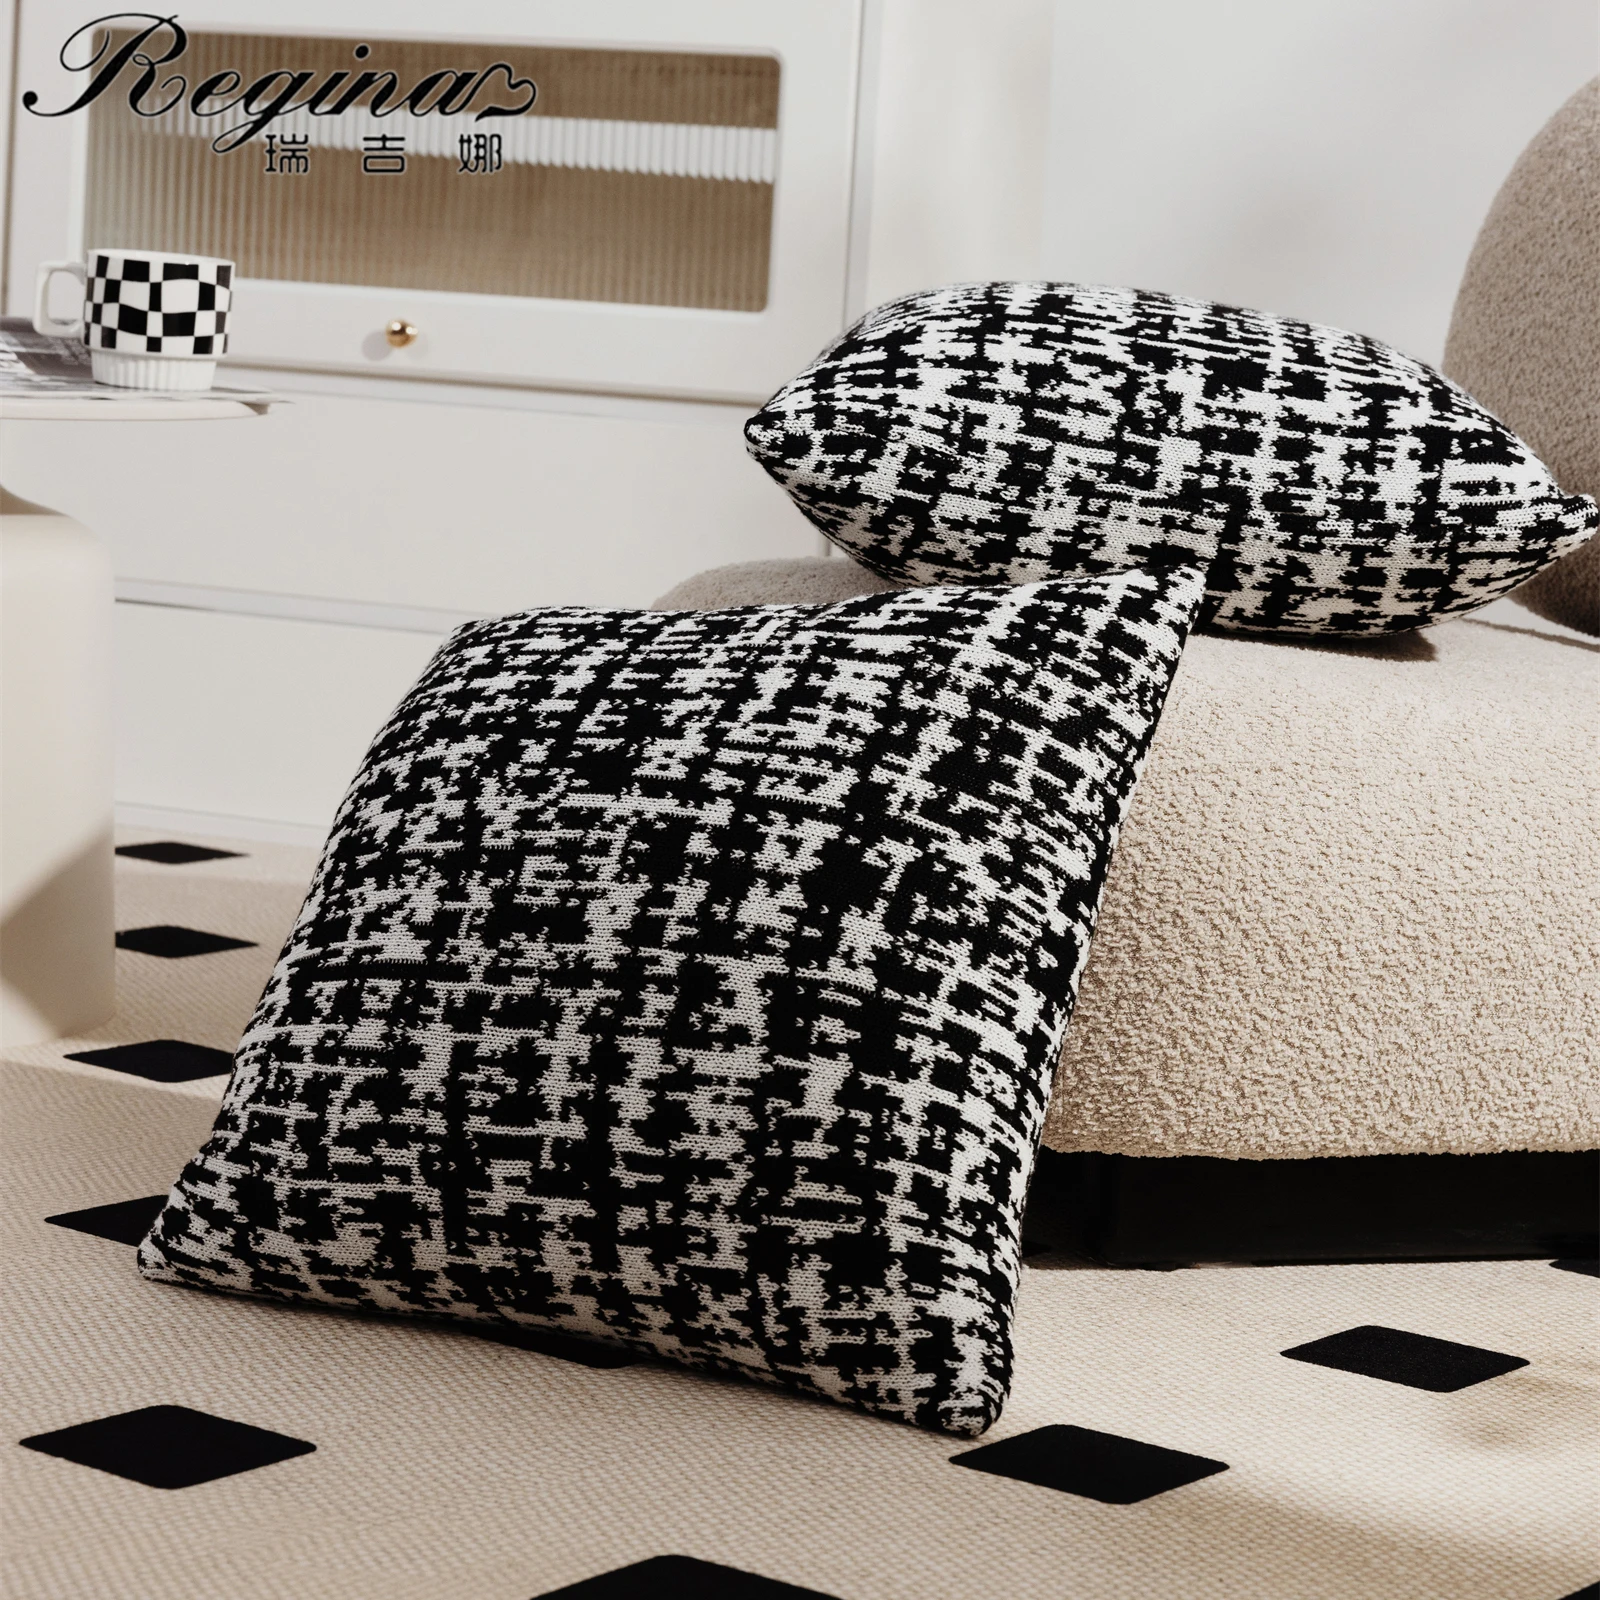 

REGINA Brand High-end Wool Blend Cushion Cover 45*45cm Classic Black White Fluffy Soft Pillow Case For Bedroom Living Room Decor